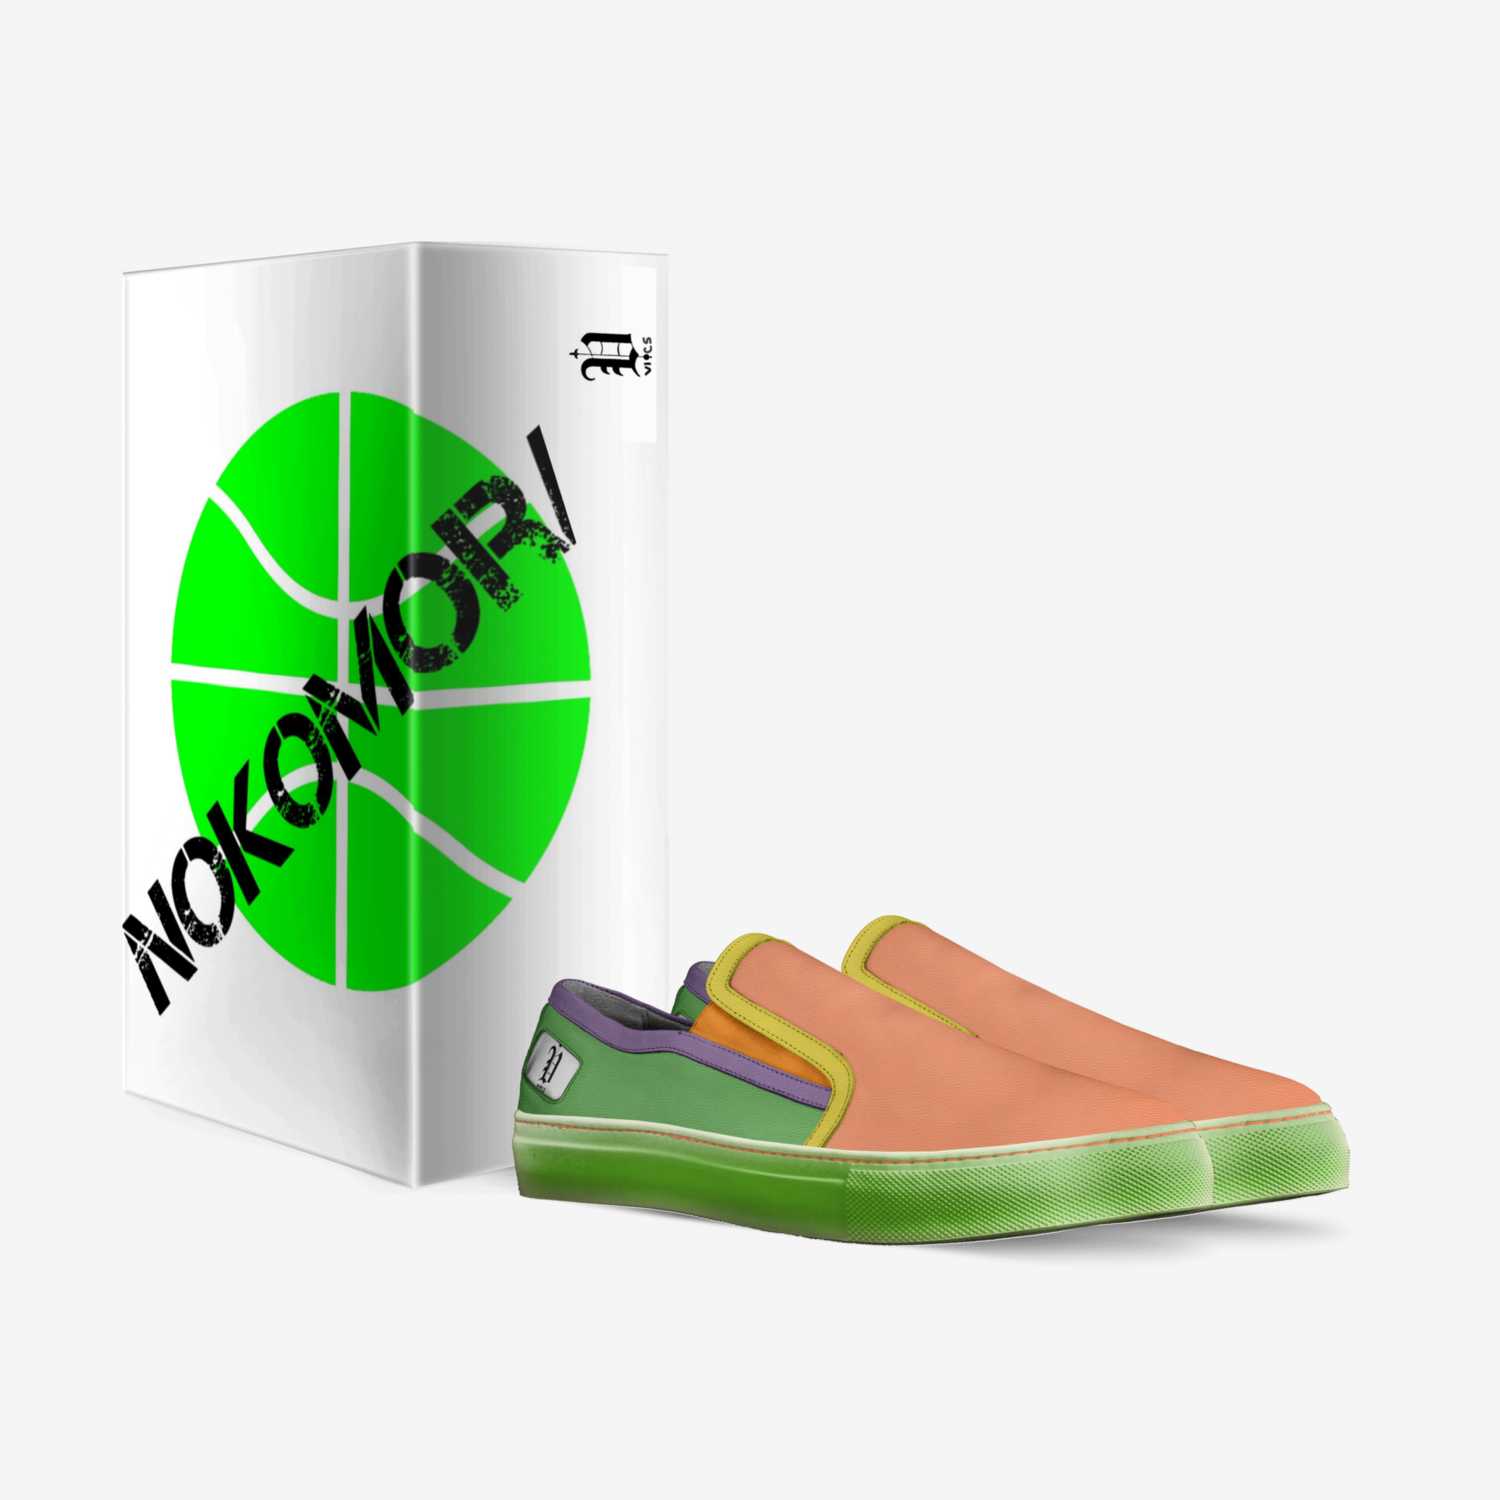 vics nokomora 5 custom made in Italy shoes by Brayden Murphy | Box view